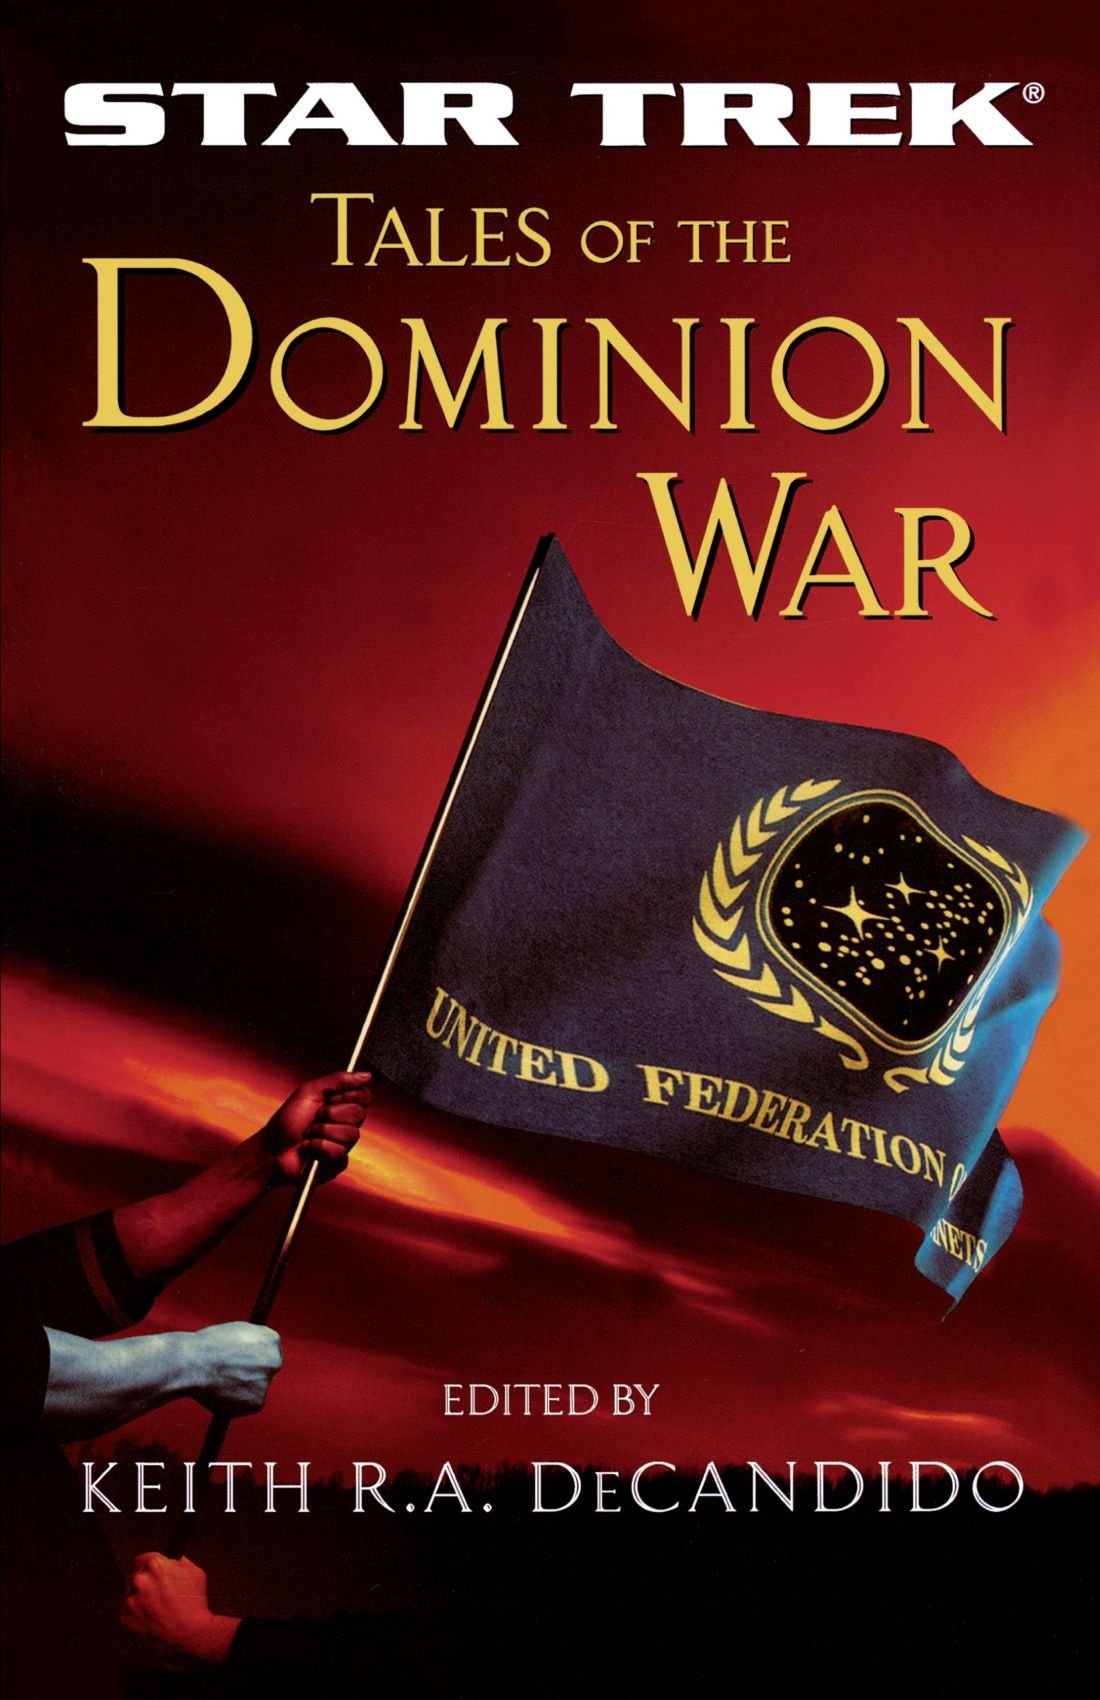 “Star Trek: Tales of the Dominion War” Review by Positivelytrek.com